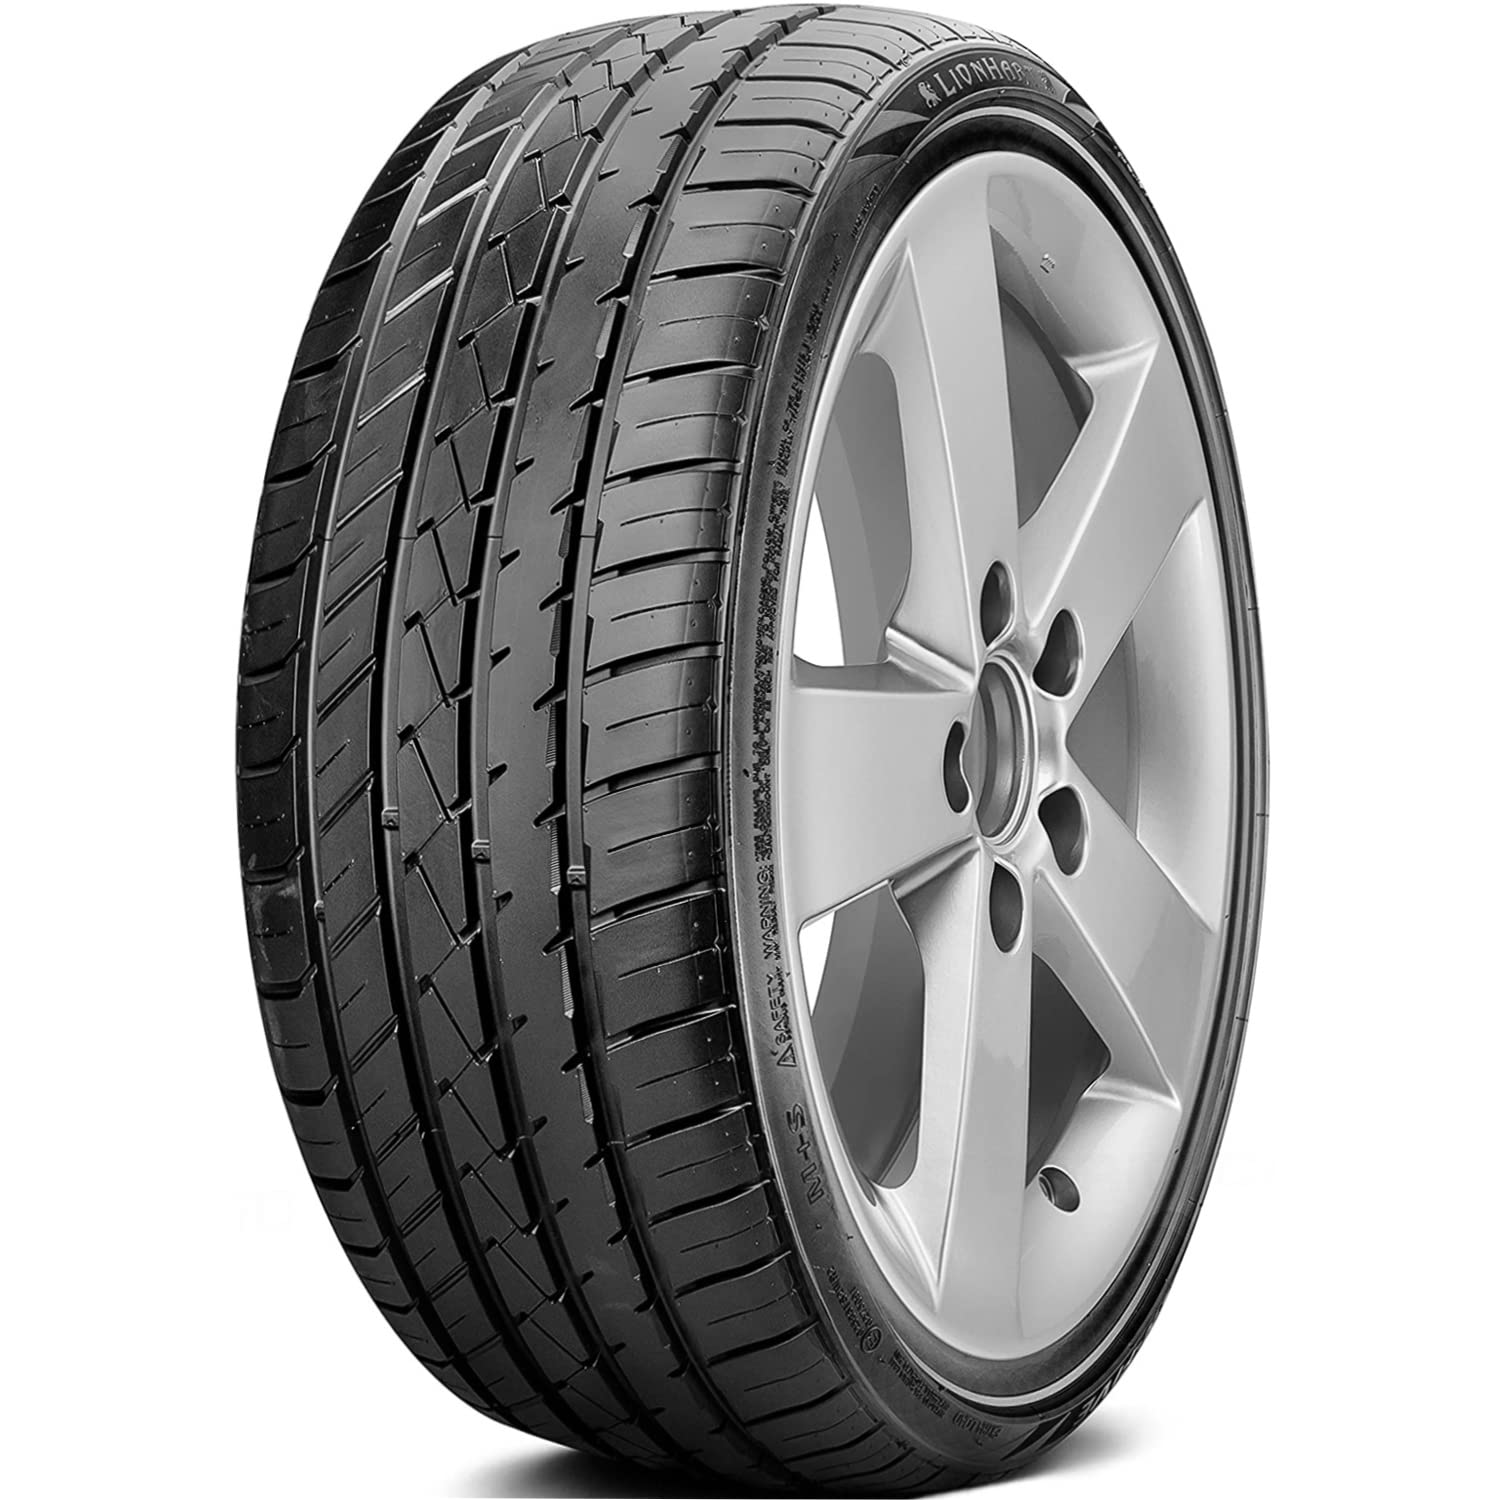 LIONHART LH-FIVE 275/23ZR24 (29X10.8R 24) Tires